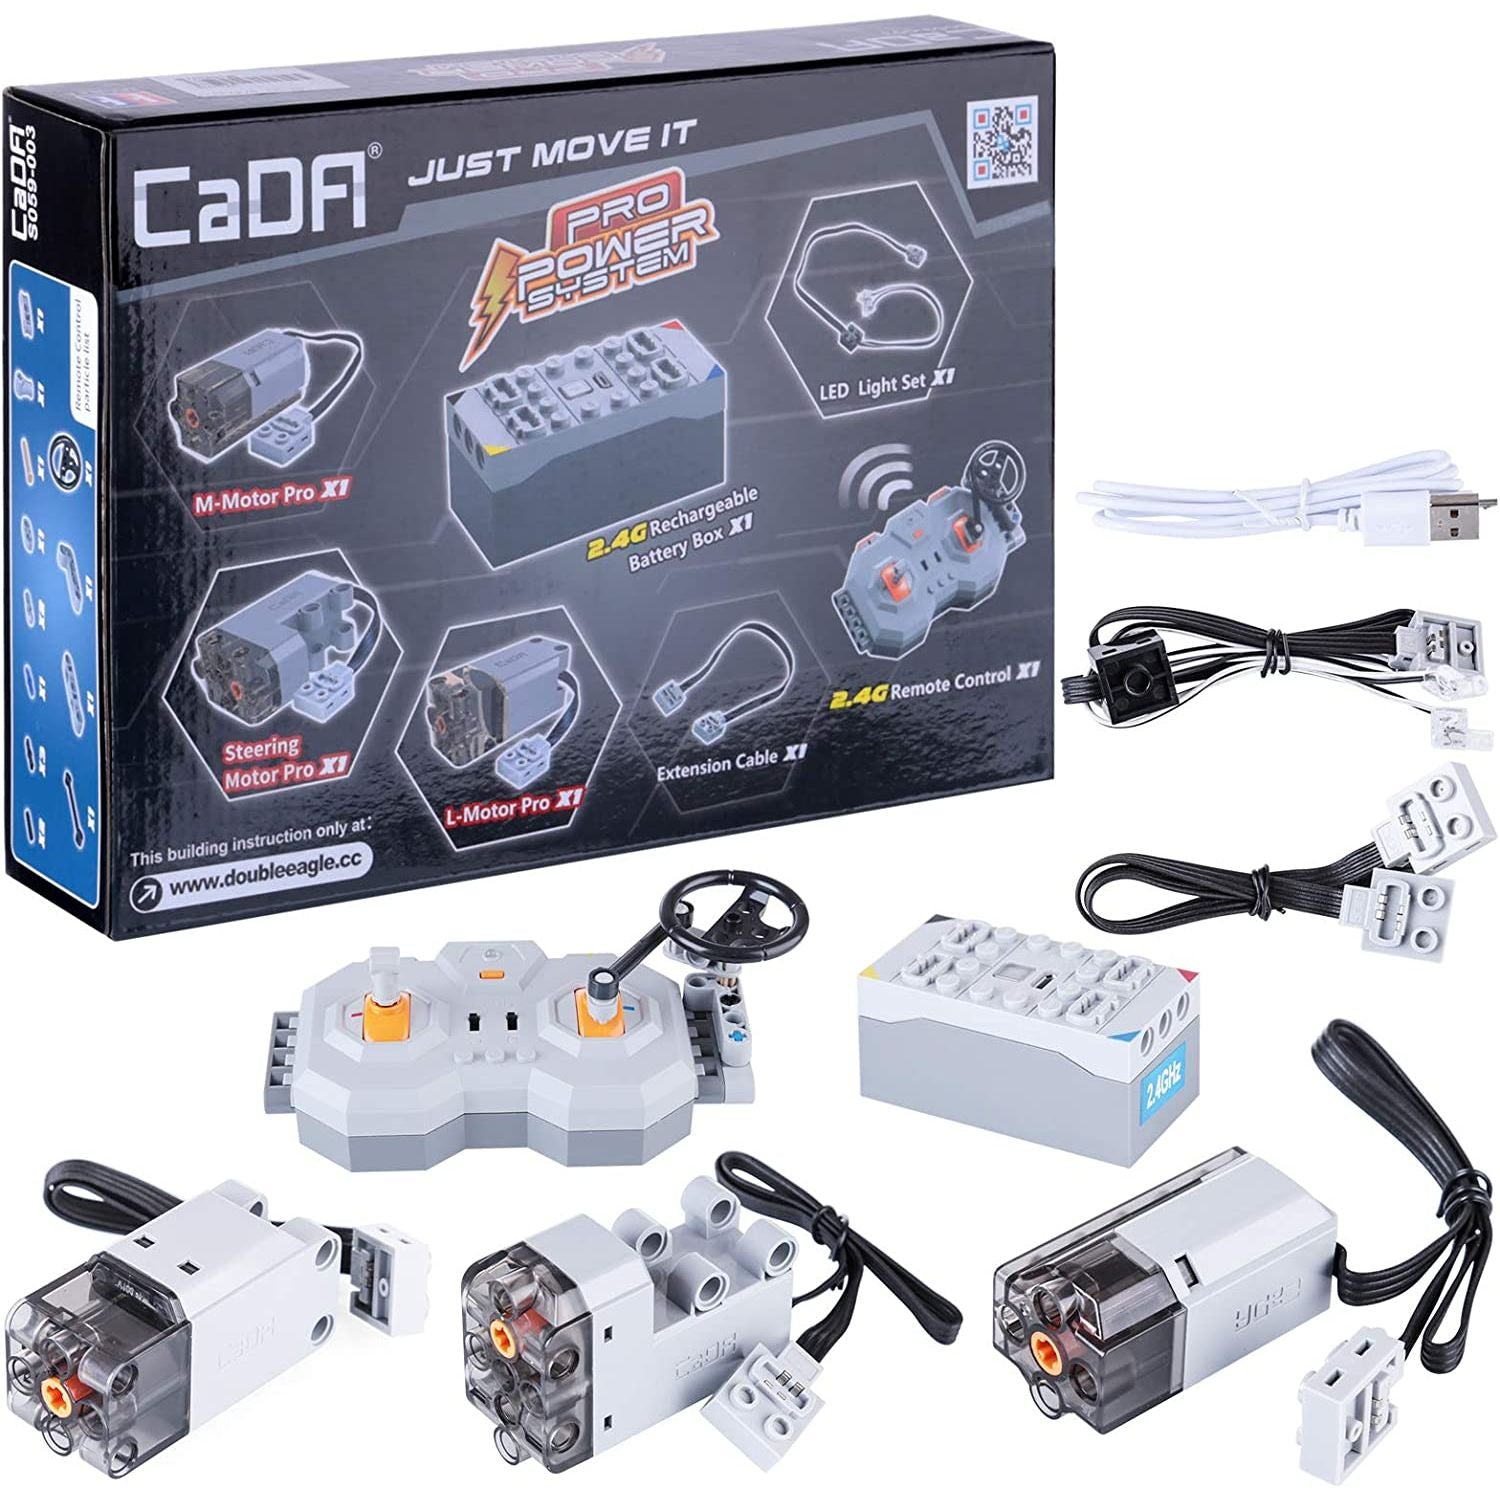 CaDA Pro Power System- Build a Motorized Version!